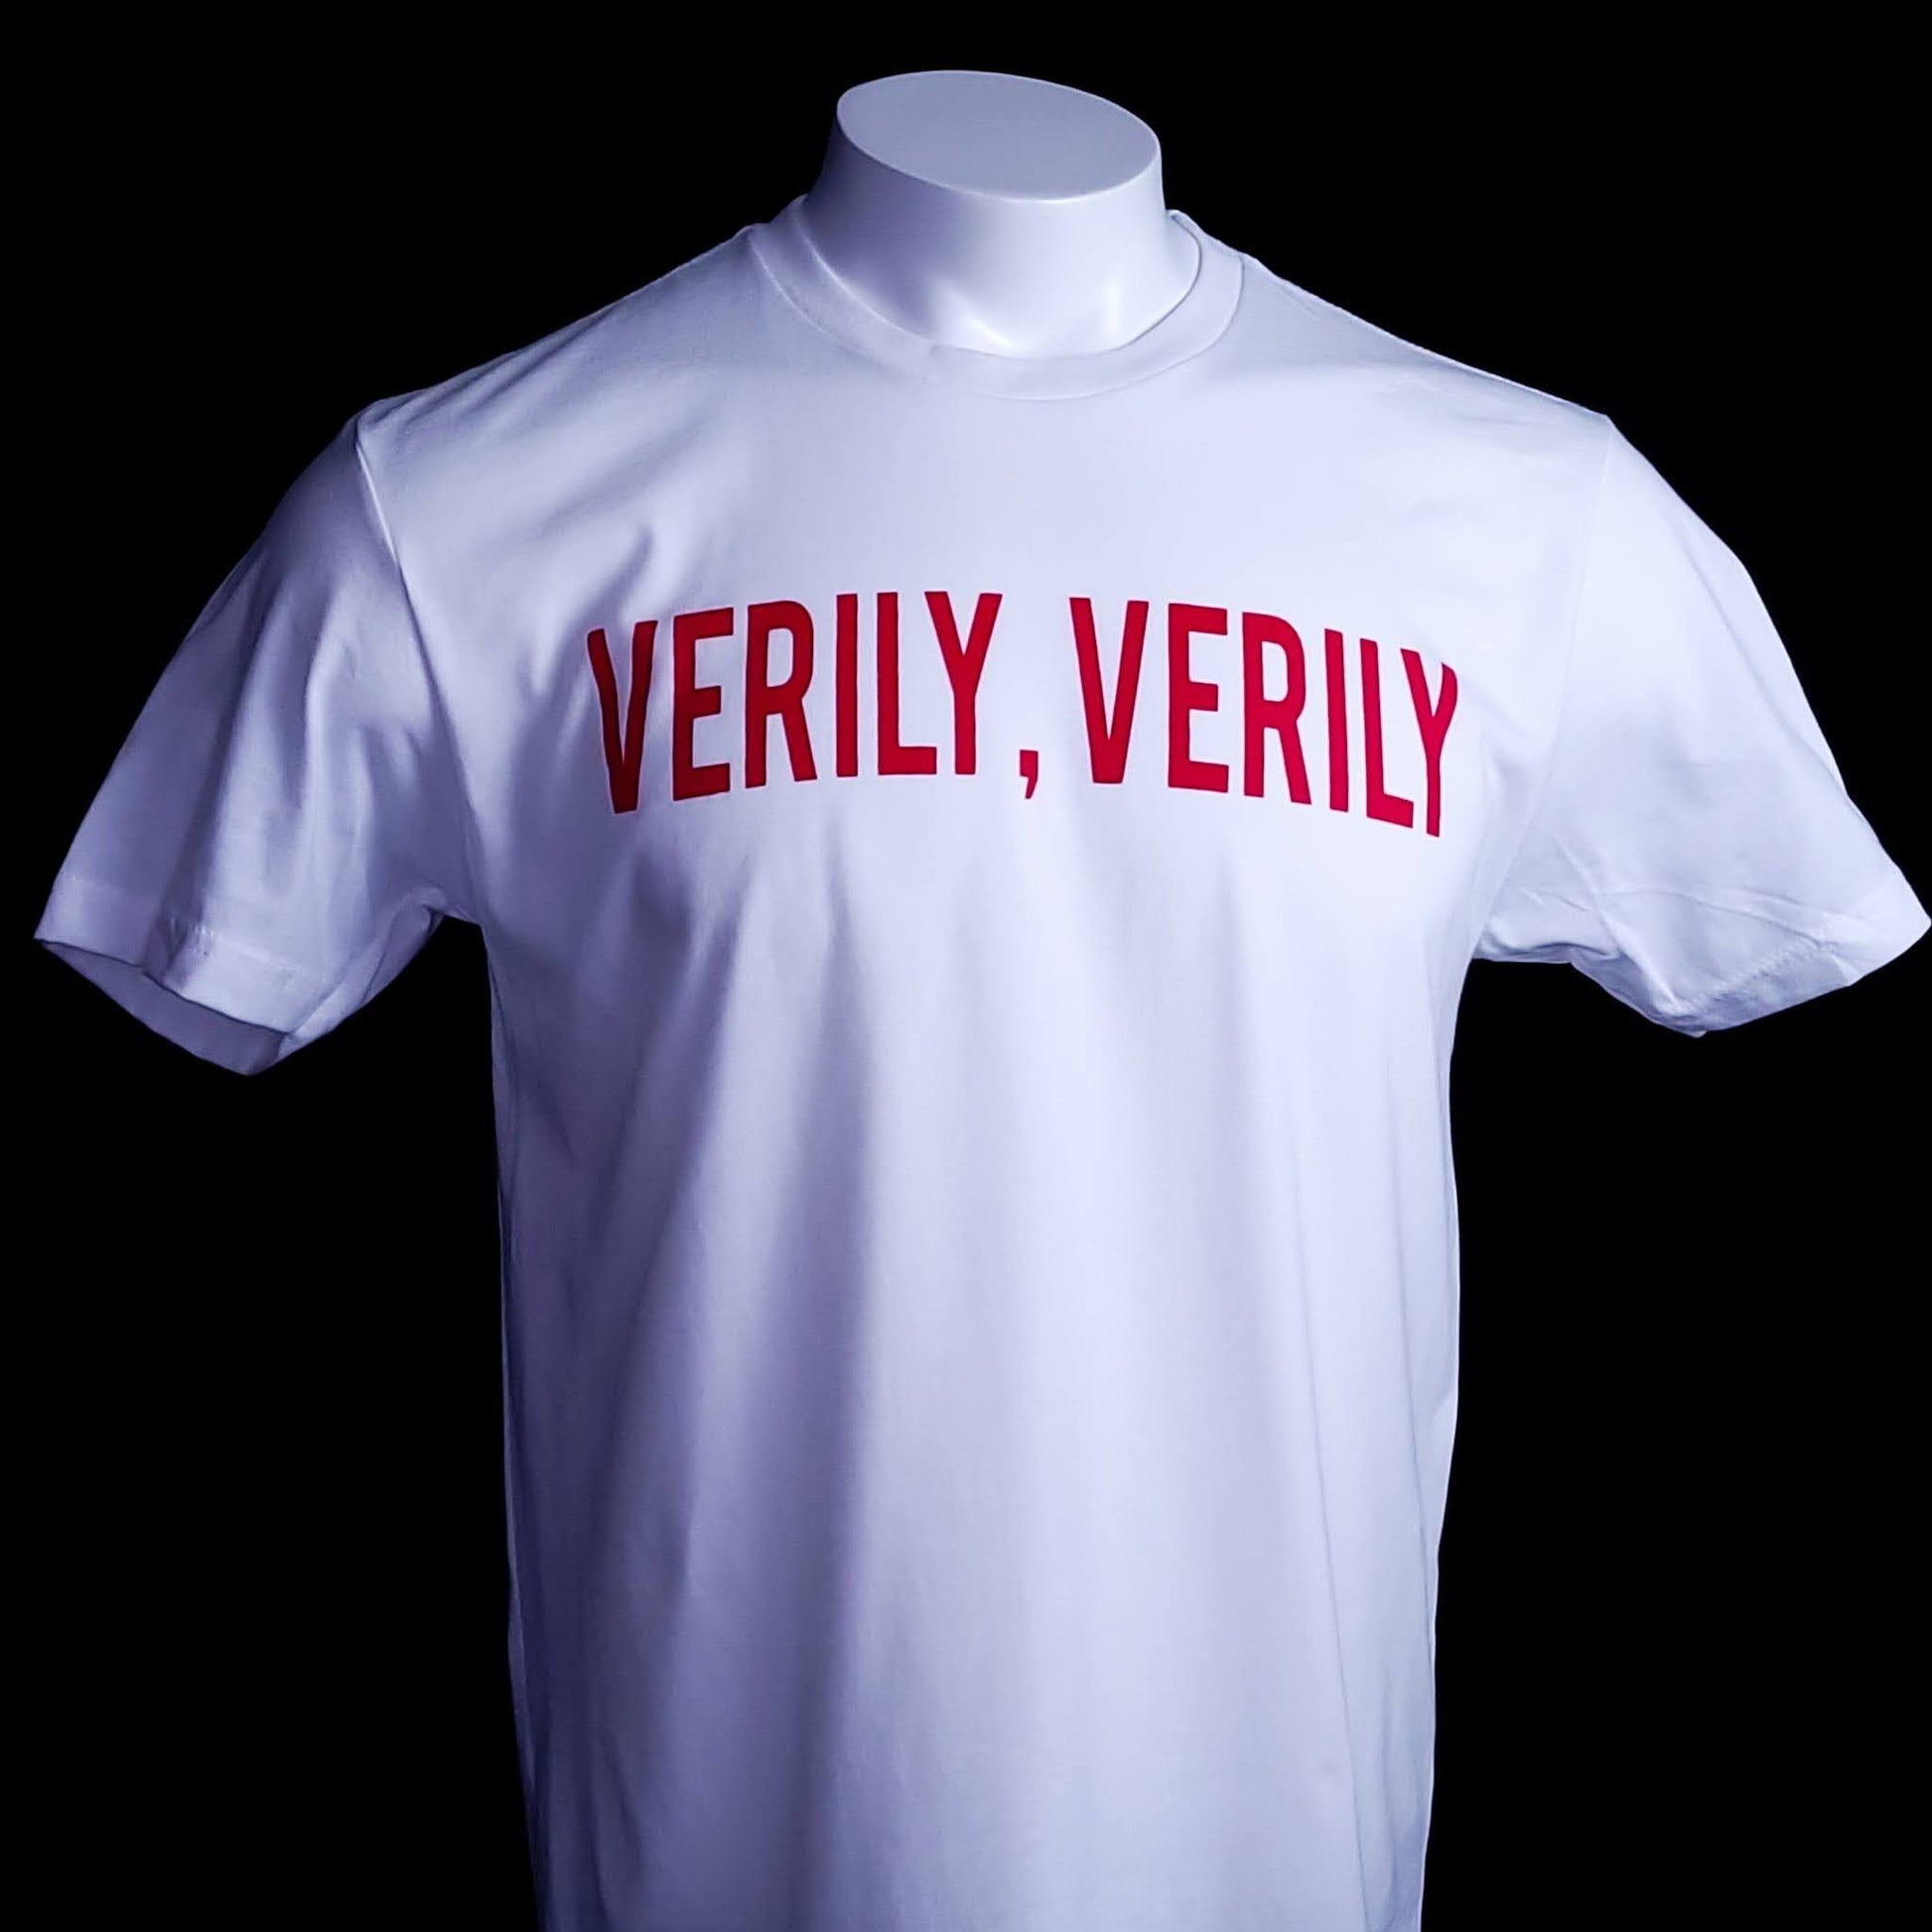 Verily Verily, Christian shirts, Jesus said it. The truth.